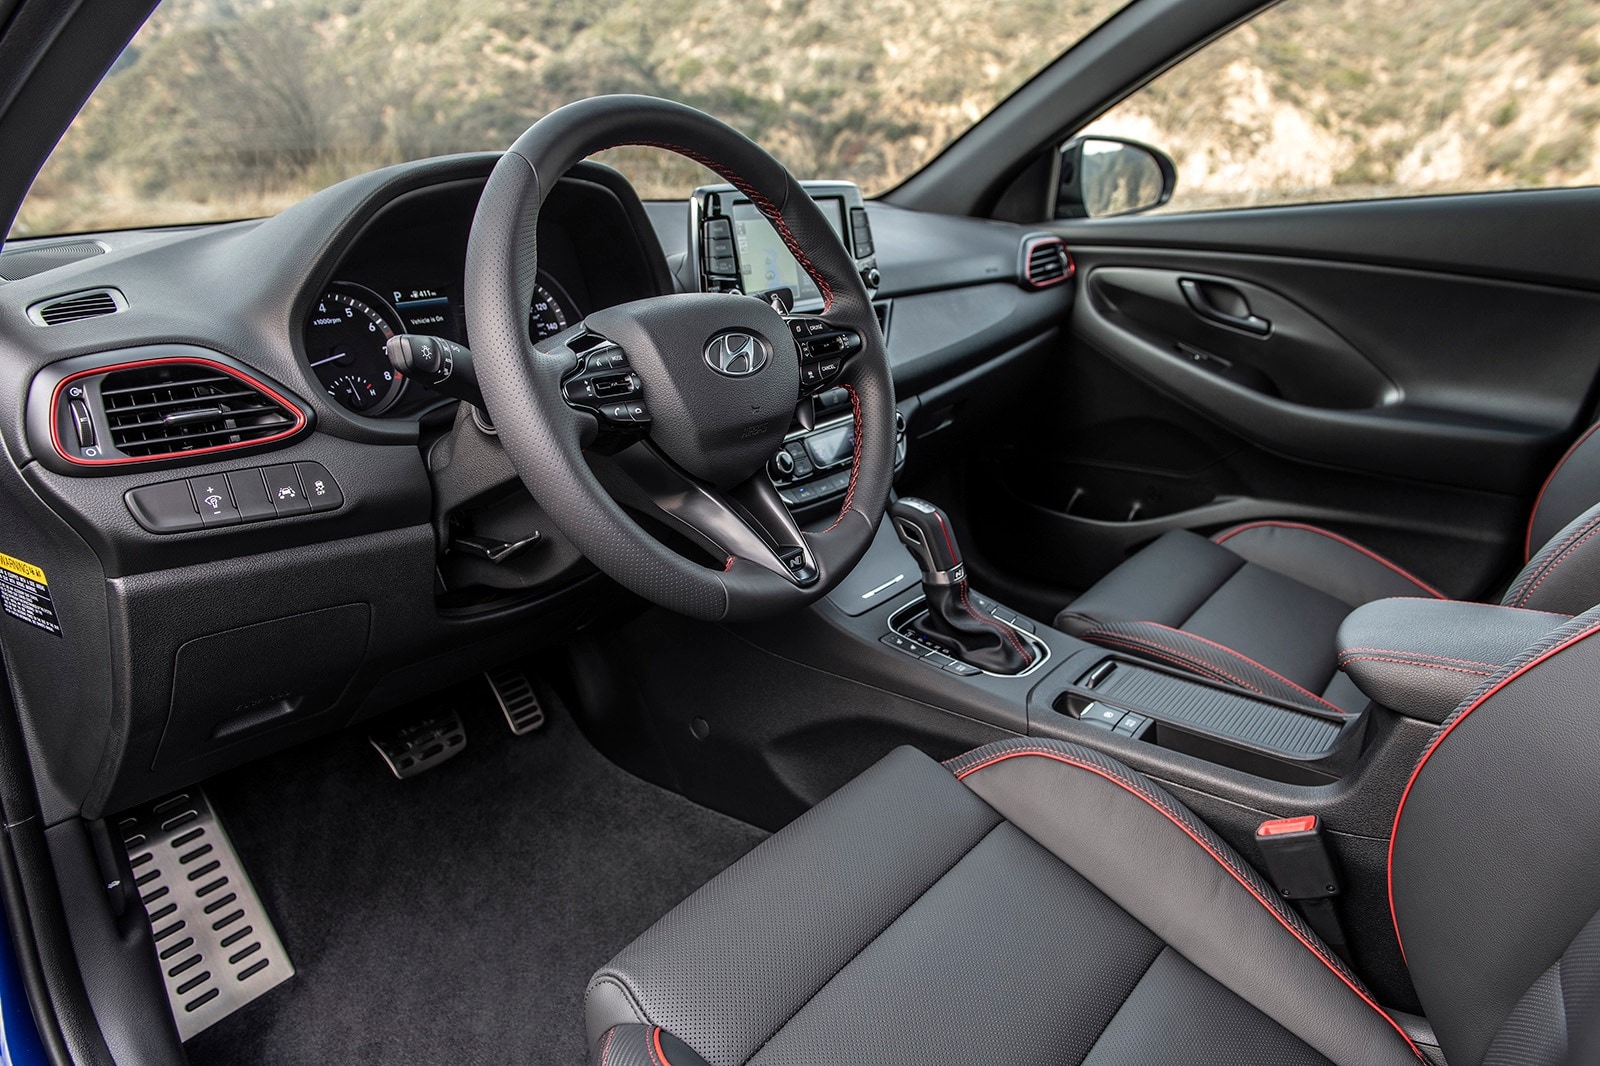 Used 2019 Hyundai Elantra GT Hatchback Review | Edmunds